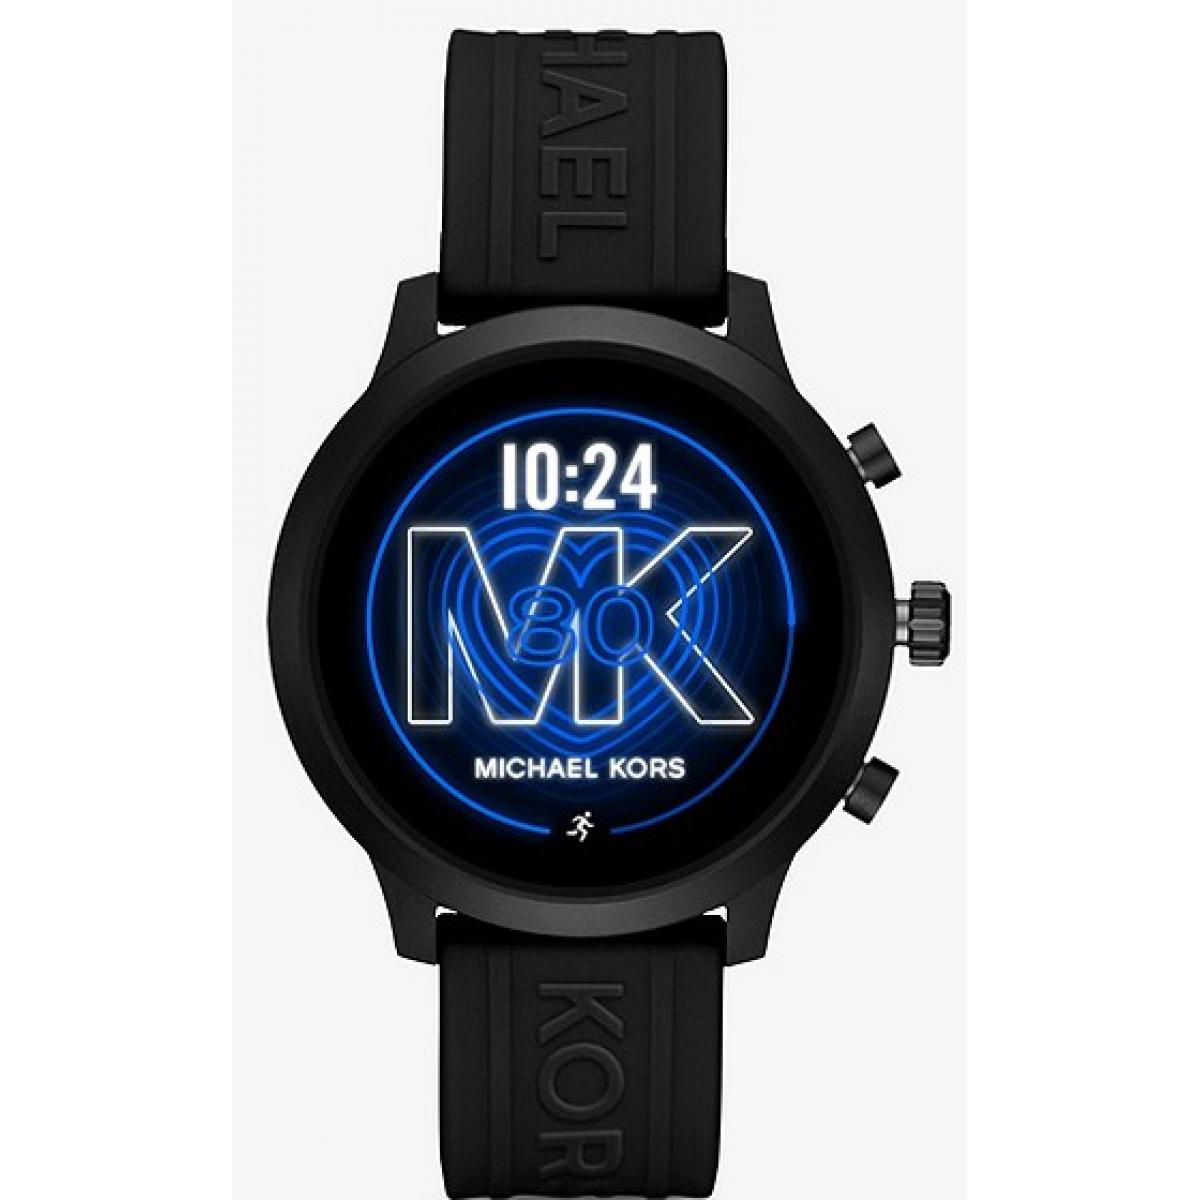 Promo : Montre Michael Kors MKT5072 - Connectée Full Display MK GO Boîtier Aluminium Noir Bracelet S